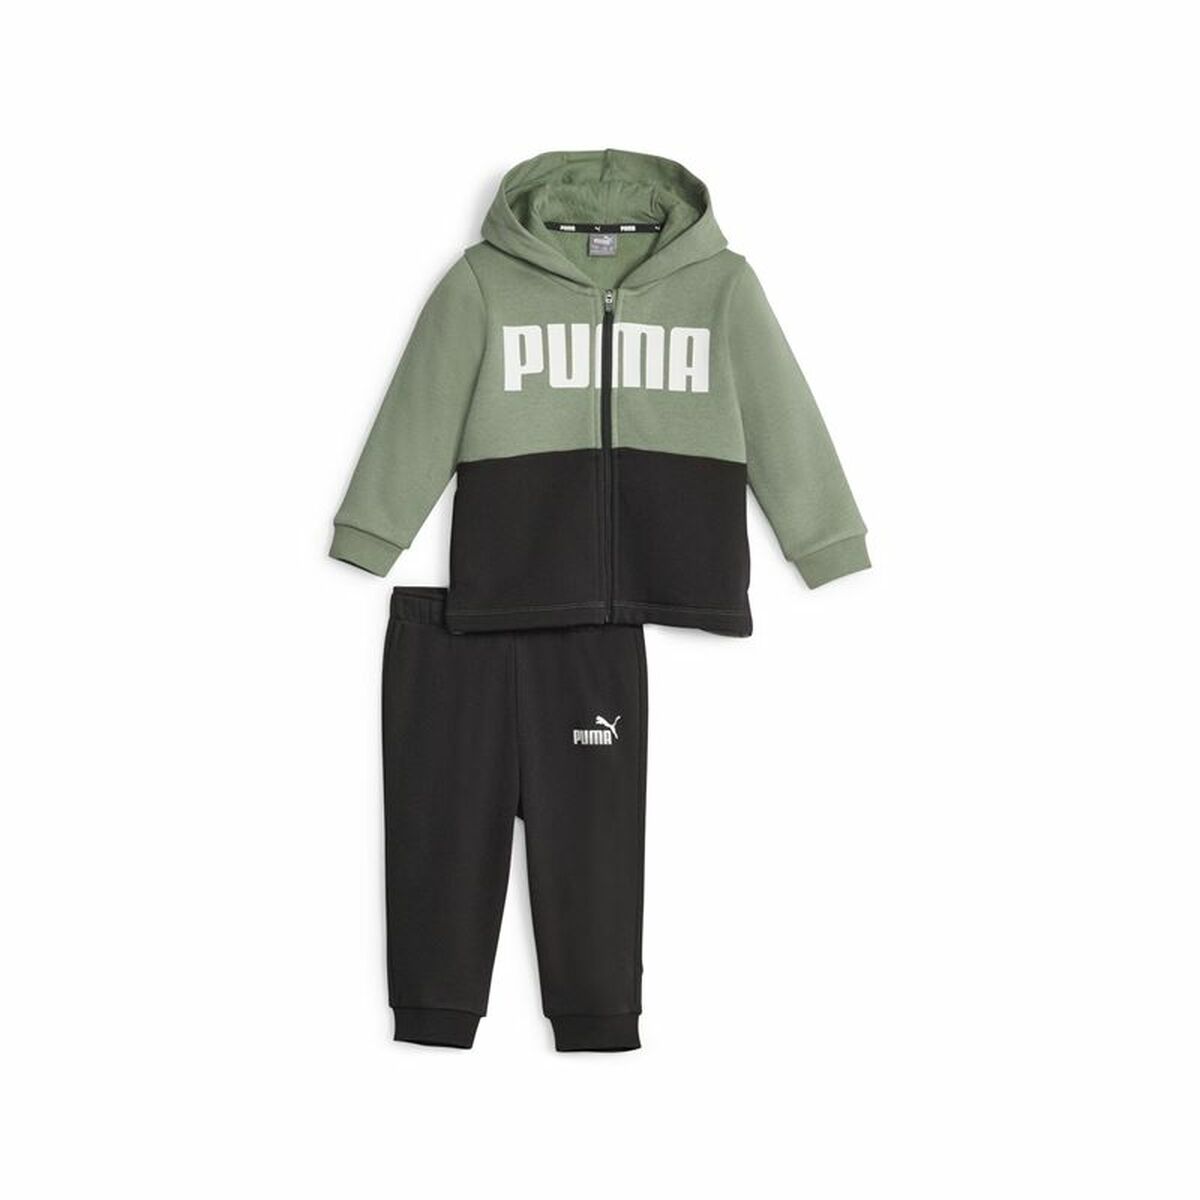 Trainingsanzug für Babys Puma Minicats Colorblockk Schwarz grün